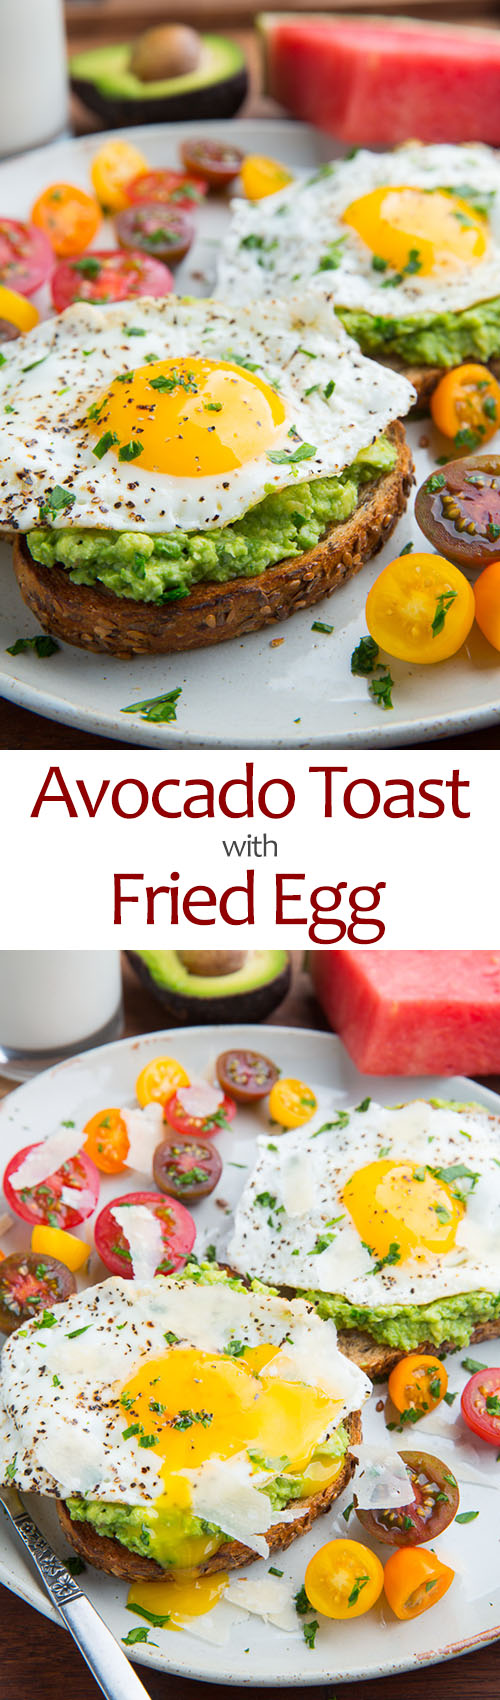 Avocado Toast with Fried Egg